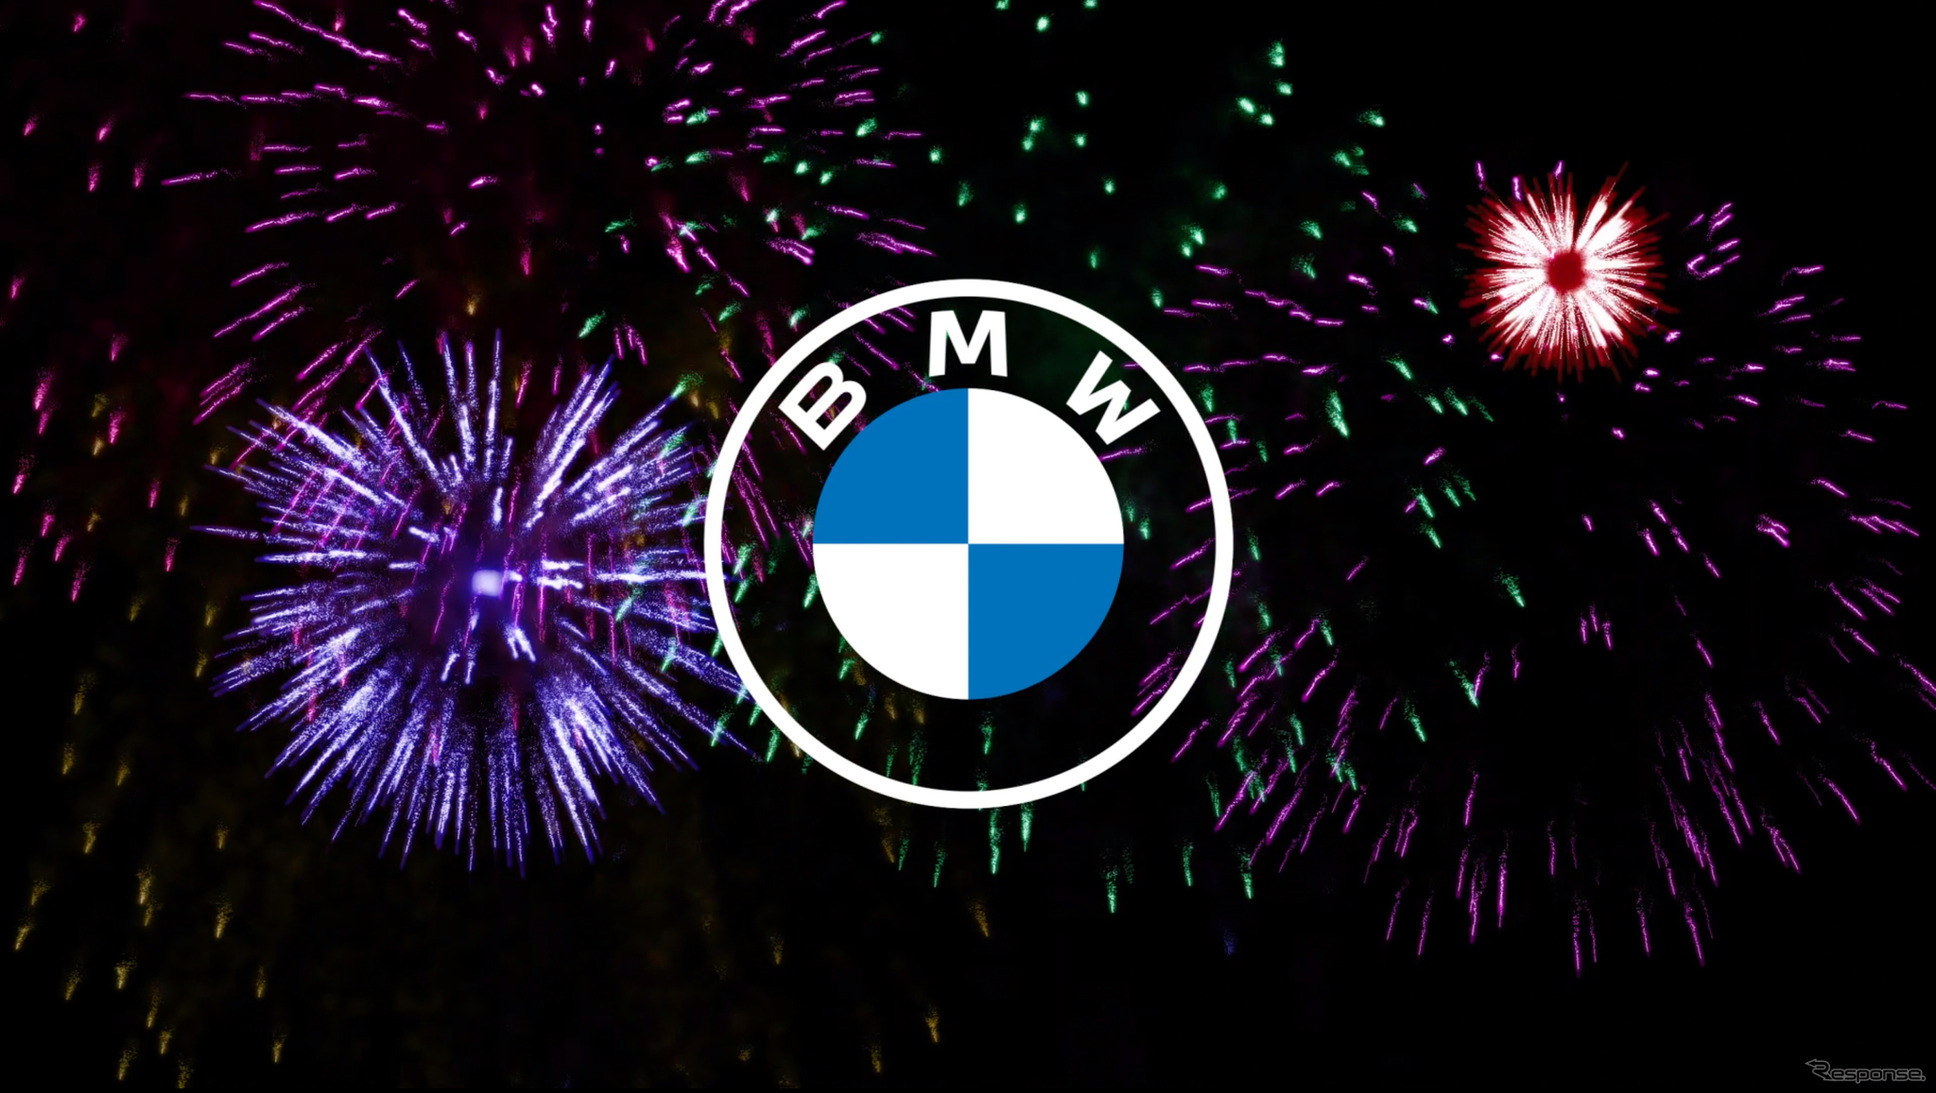 BMWの新ロゴマーク。外側の円とプロペラマークとの間に背景が見える“透過”バージョン。